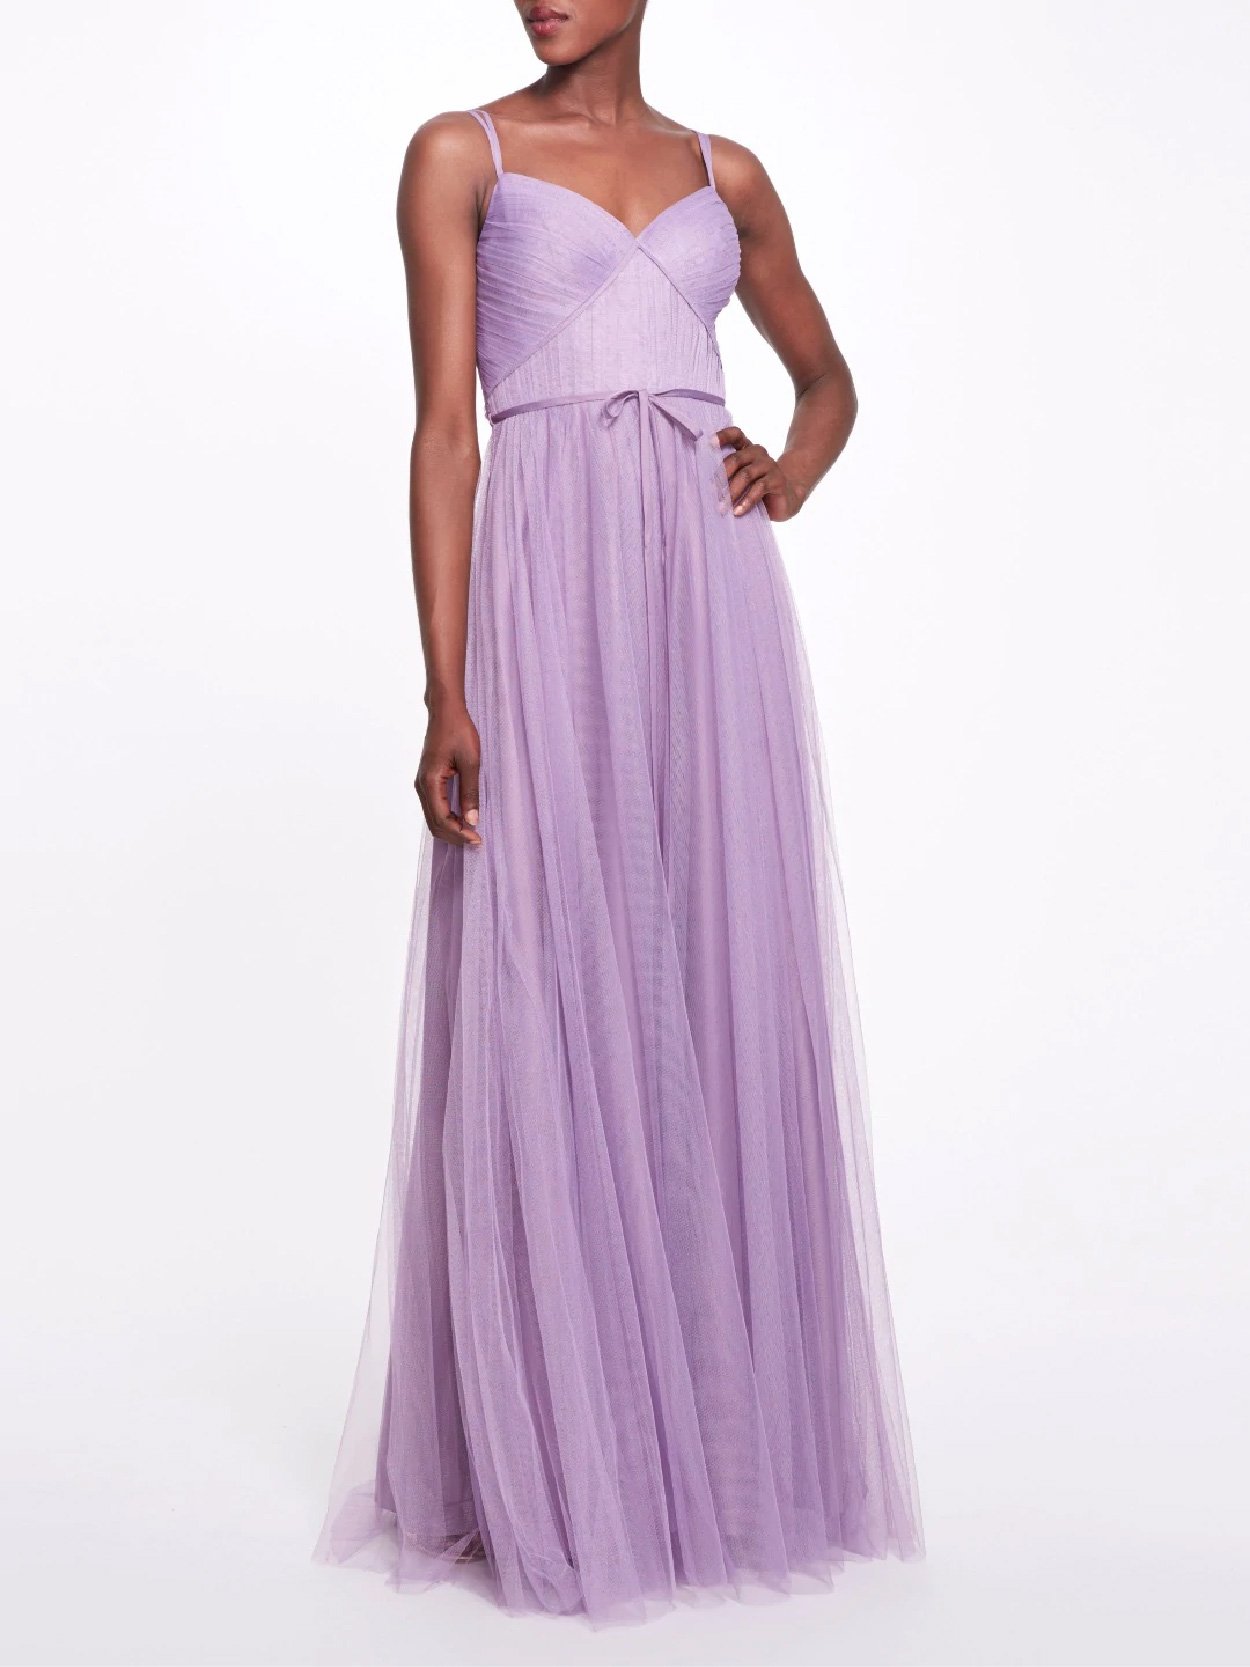 Reinvent Your Wedding Season Wardrobe With Purple Hues